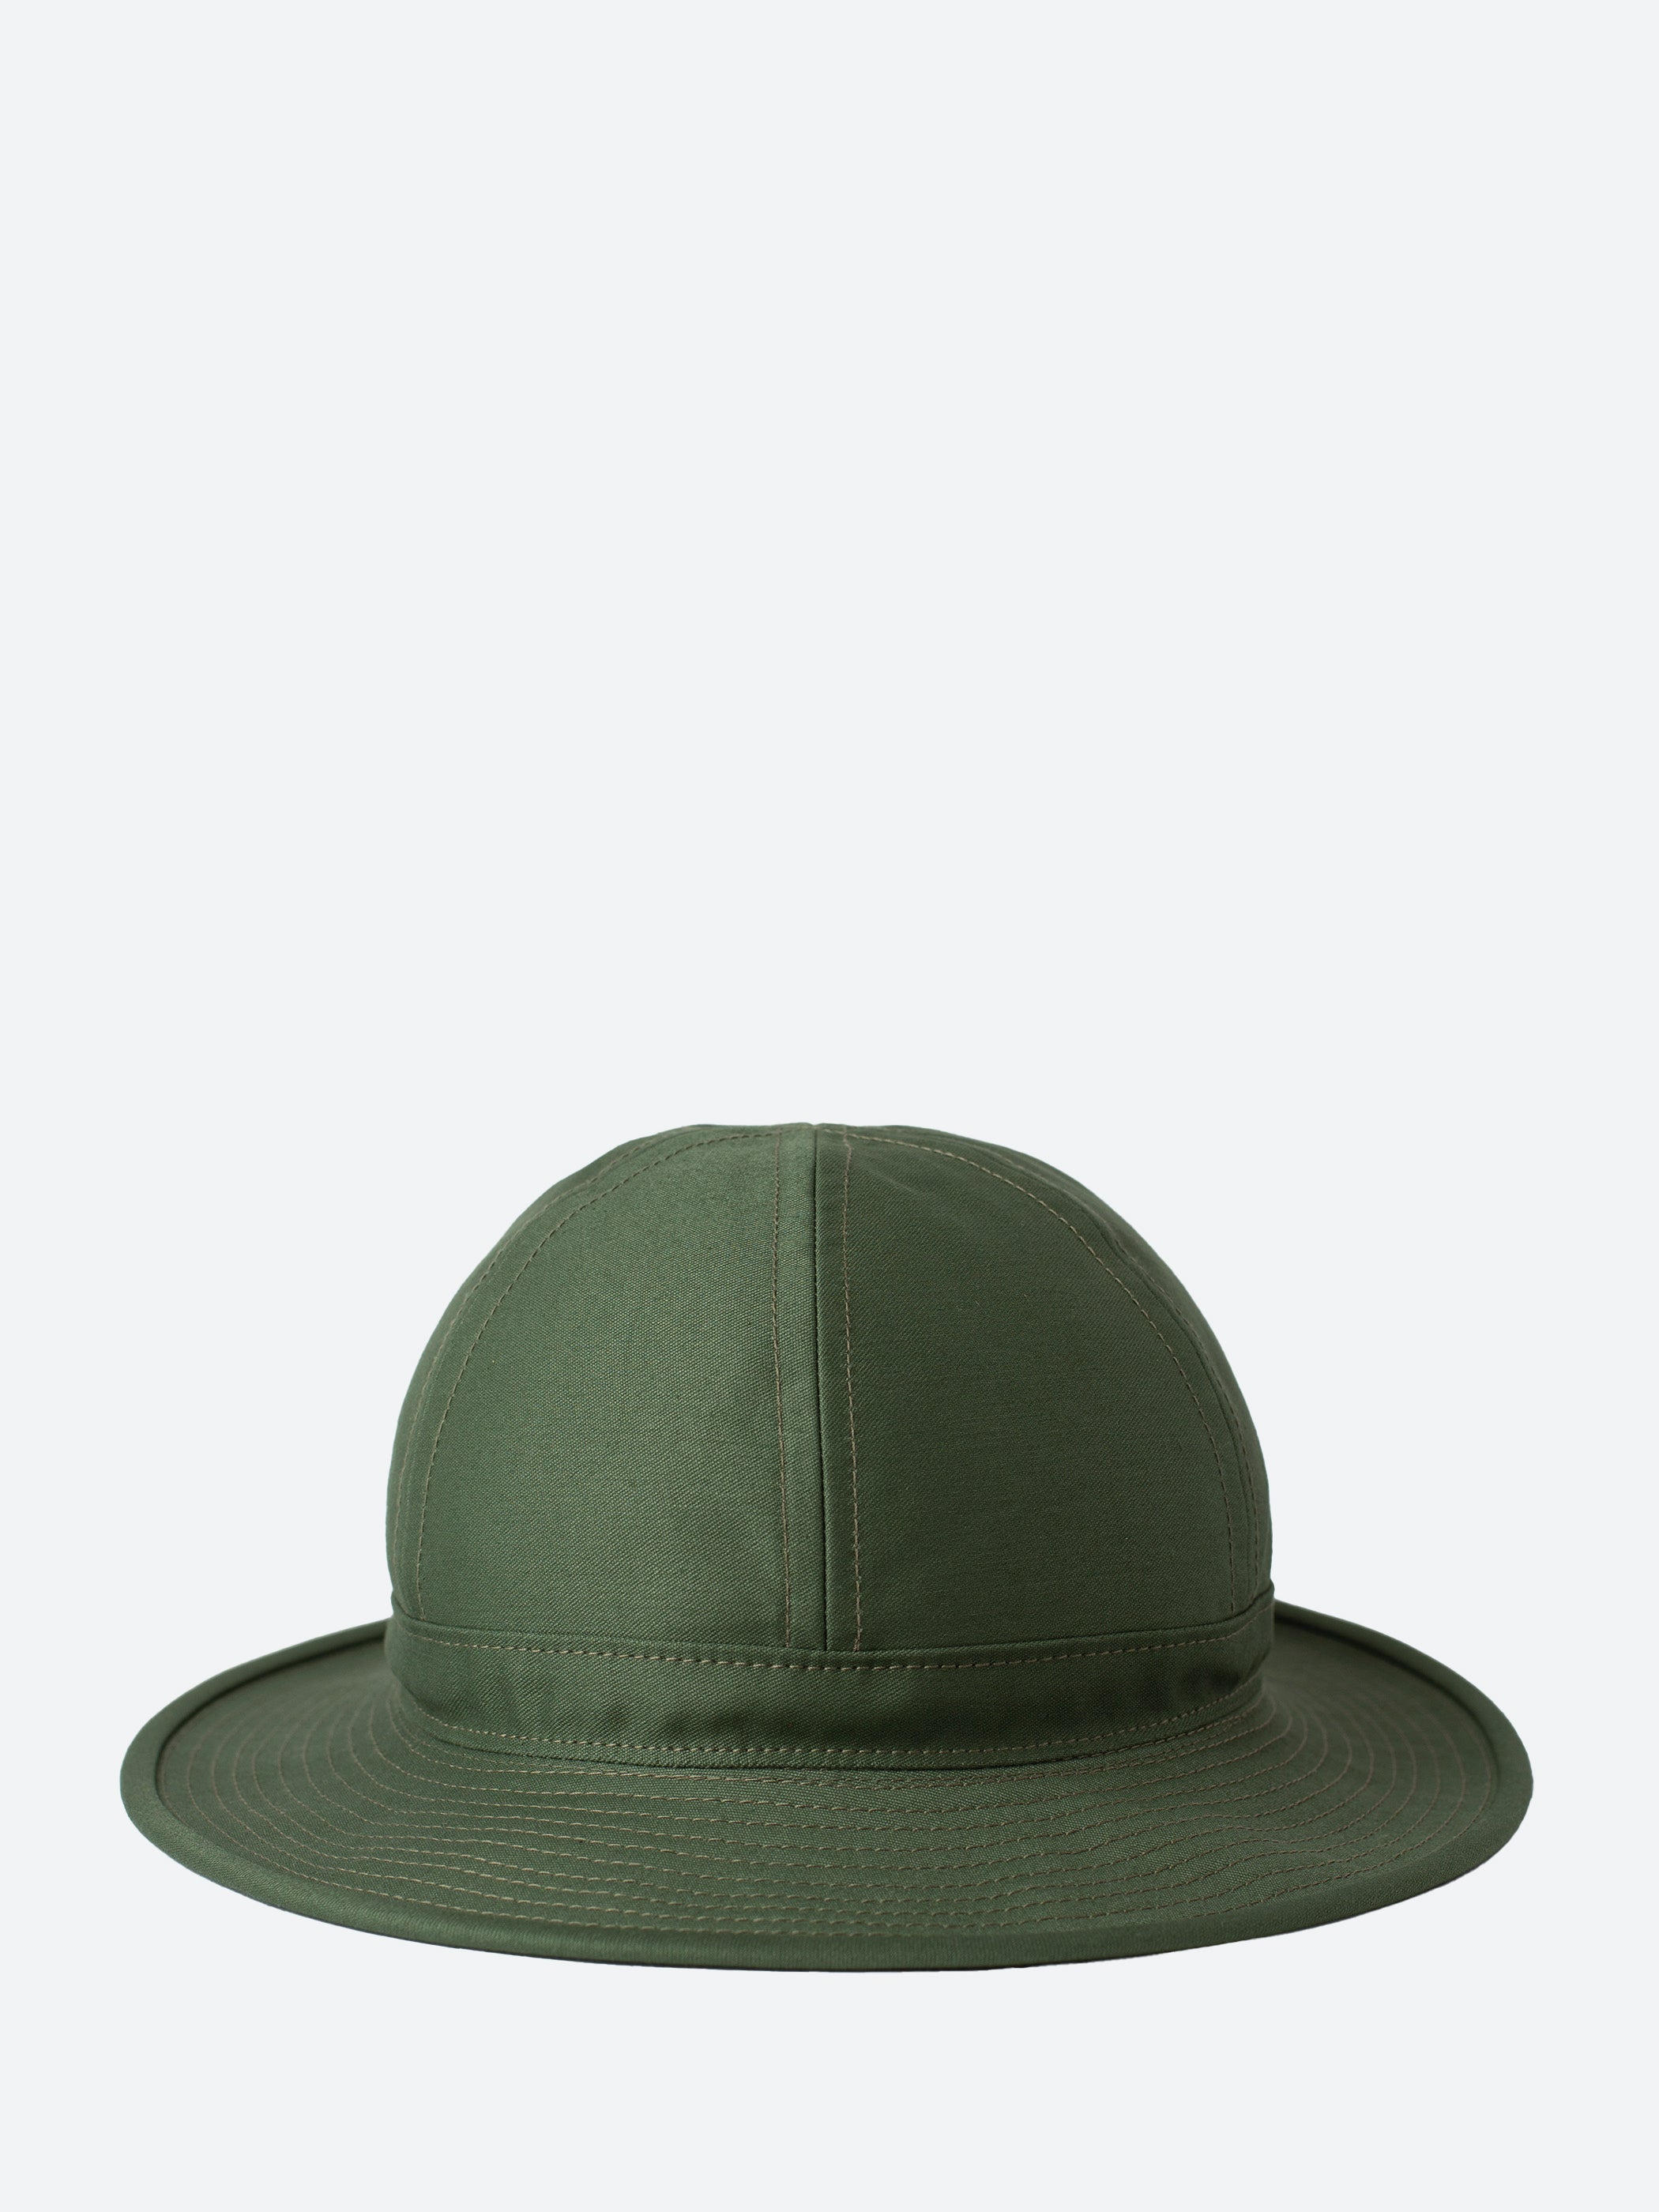 Mil Hat